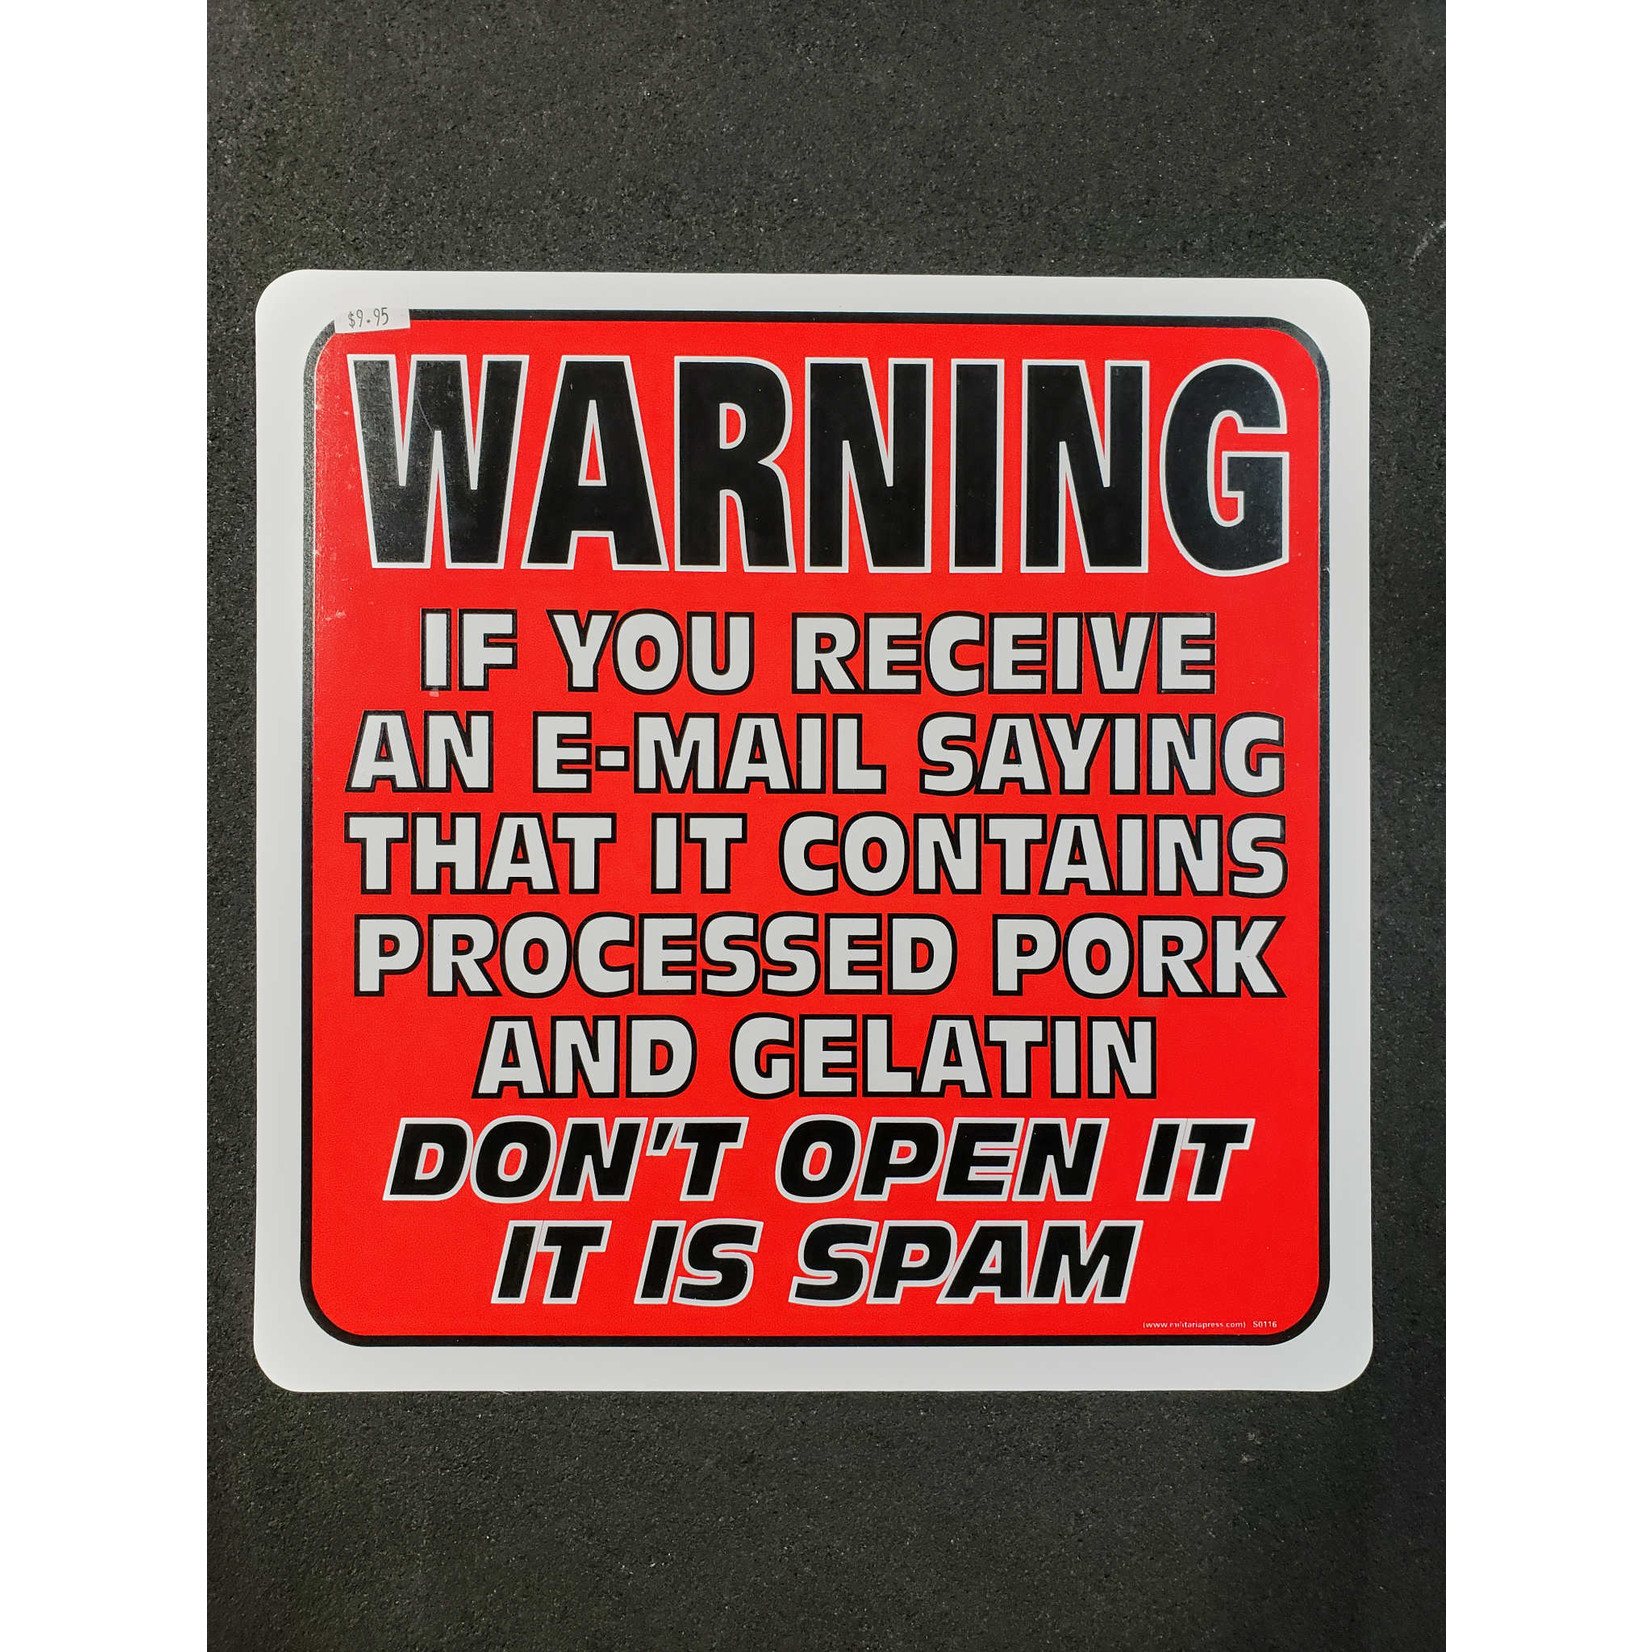 GUN SIGN: WARNING IF YOU RECEIVE AN E-MAIL